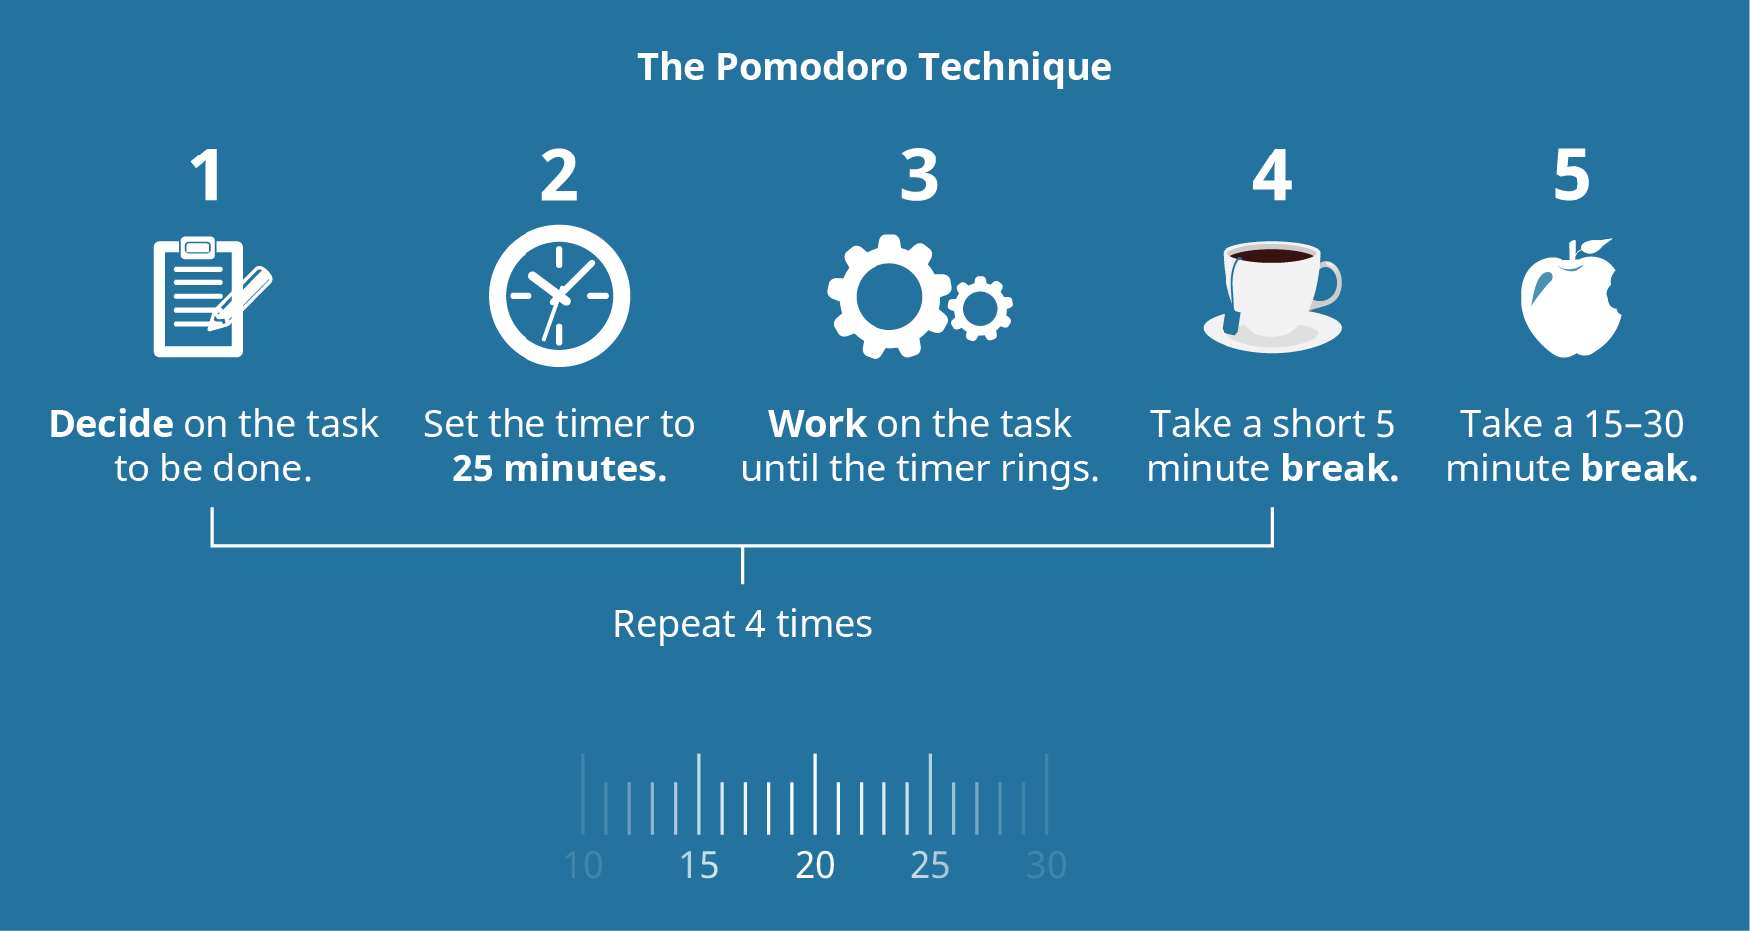 The Pomodoro technique is illustrated.